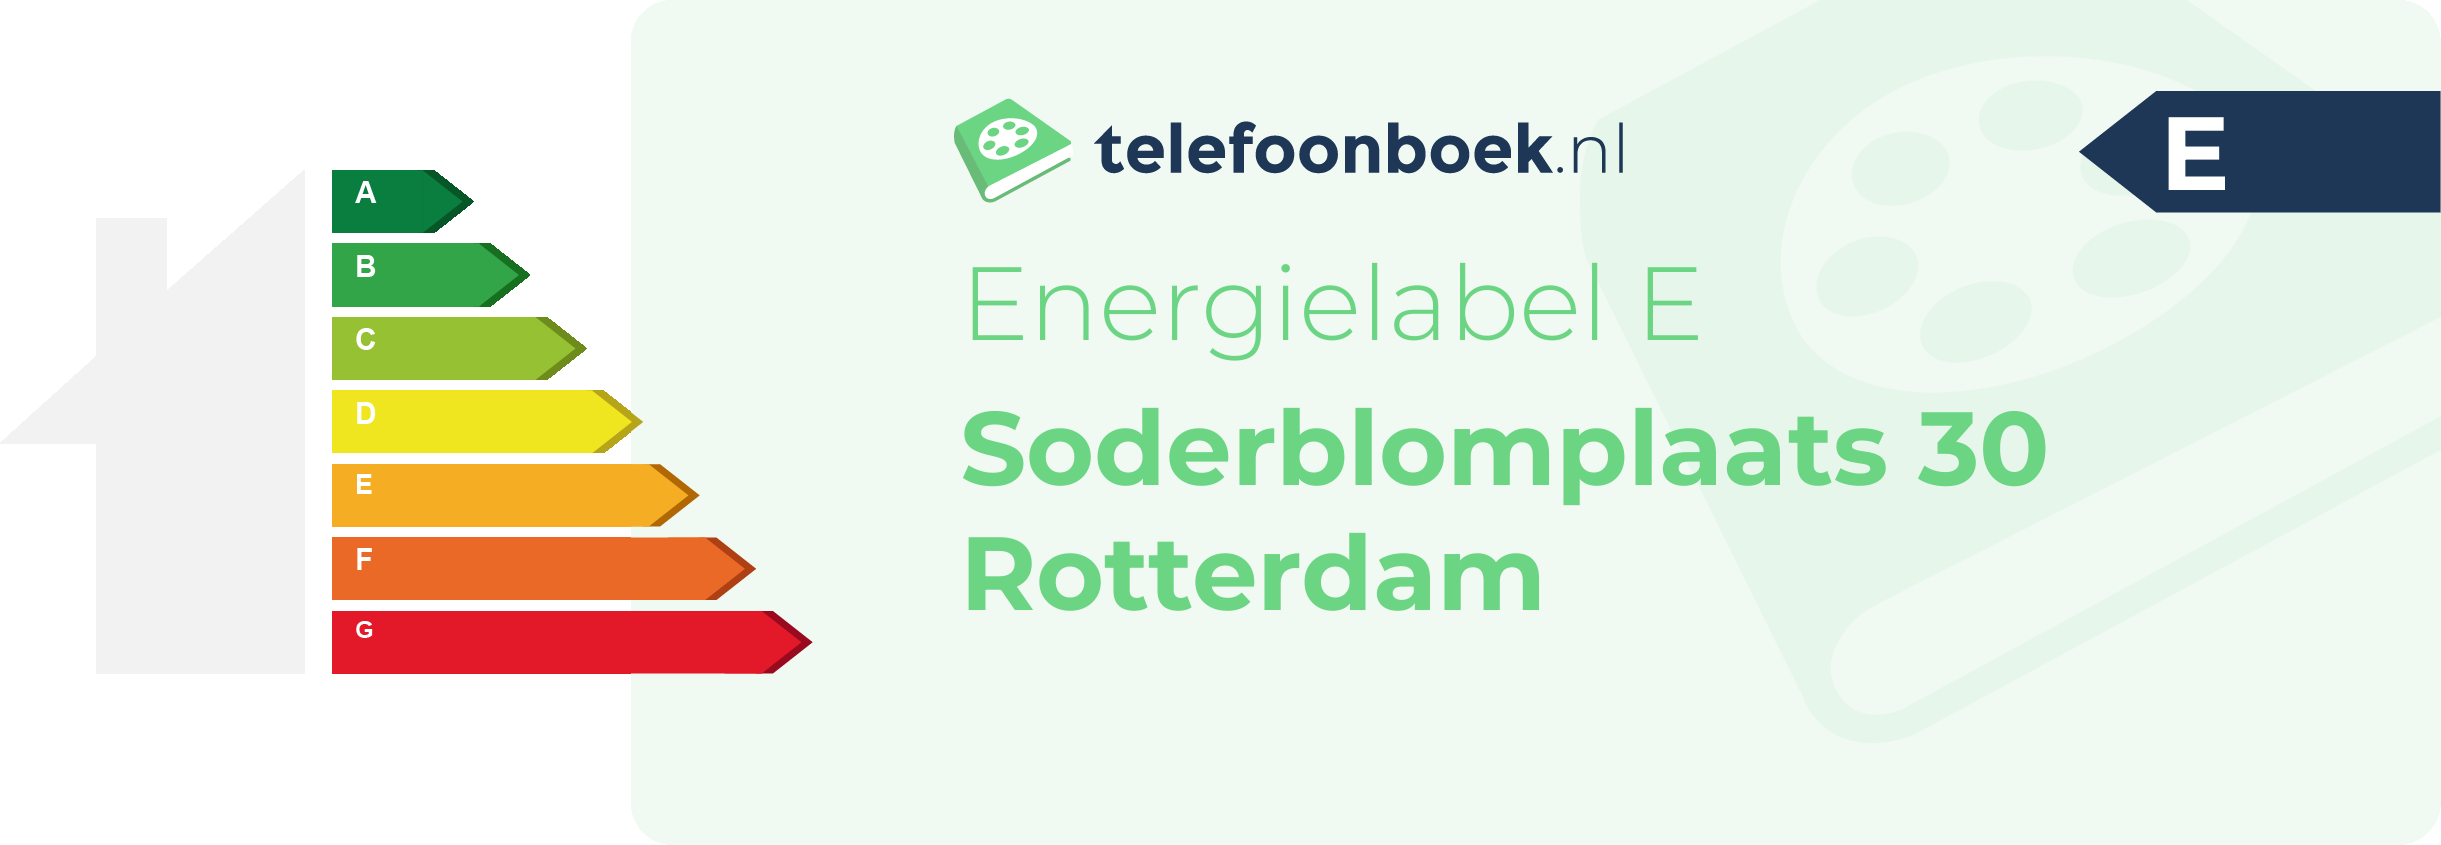 Energielabel Soderblomplaats 30 Rotterdam